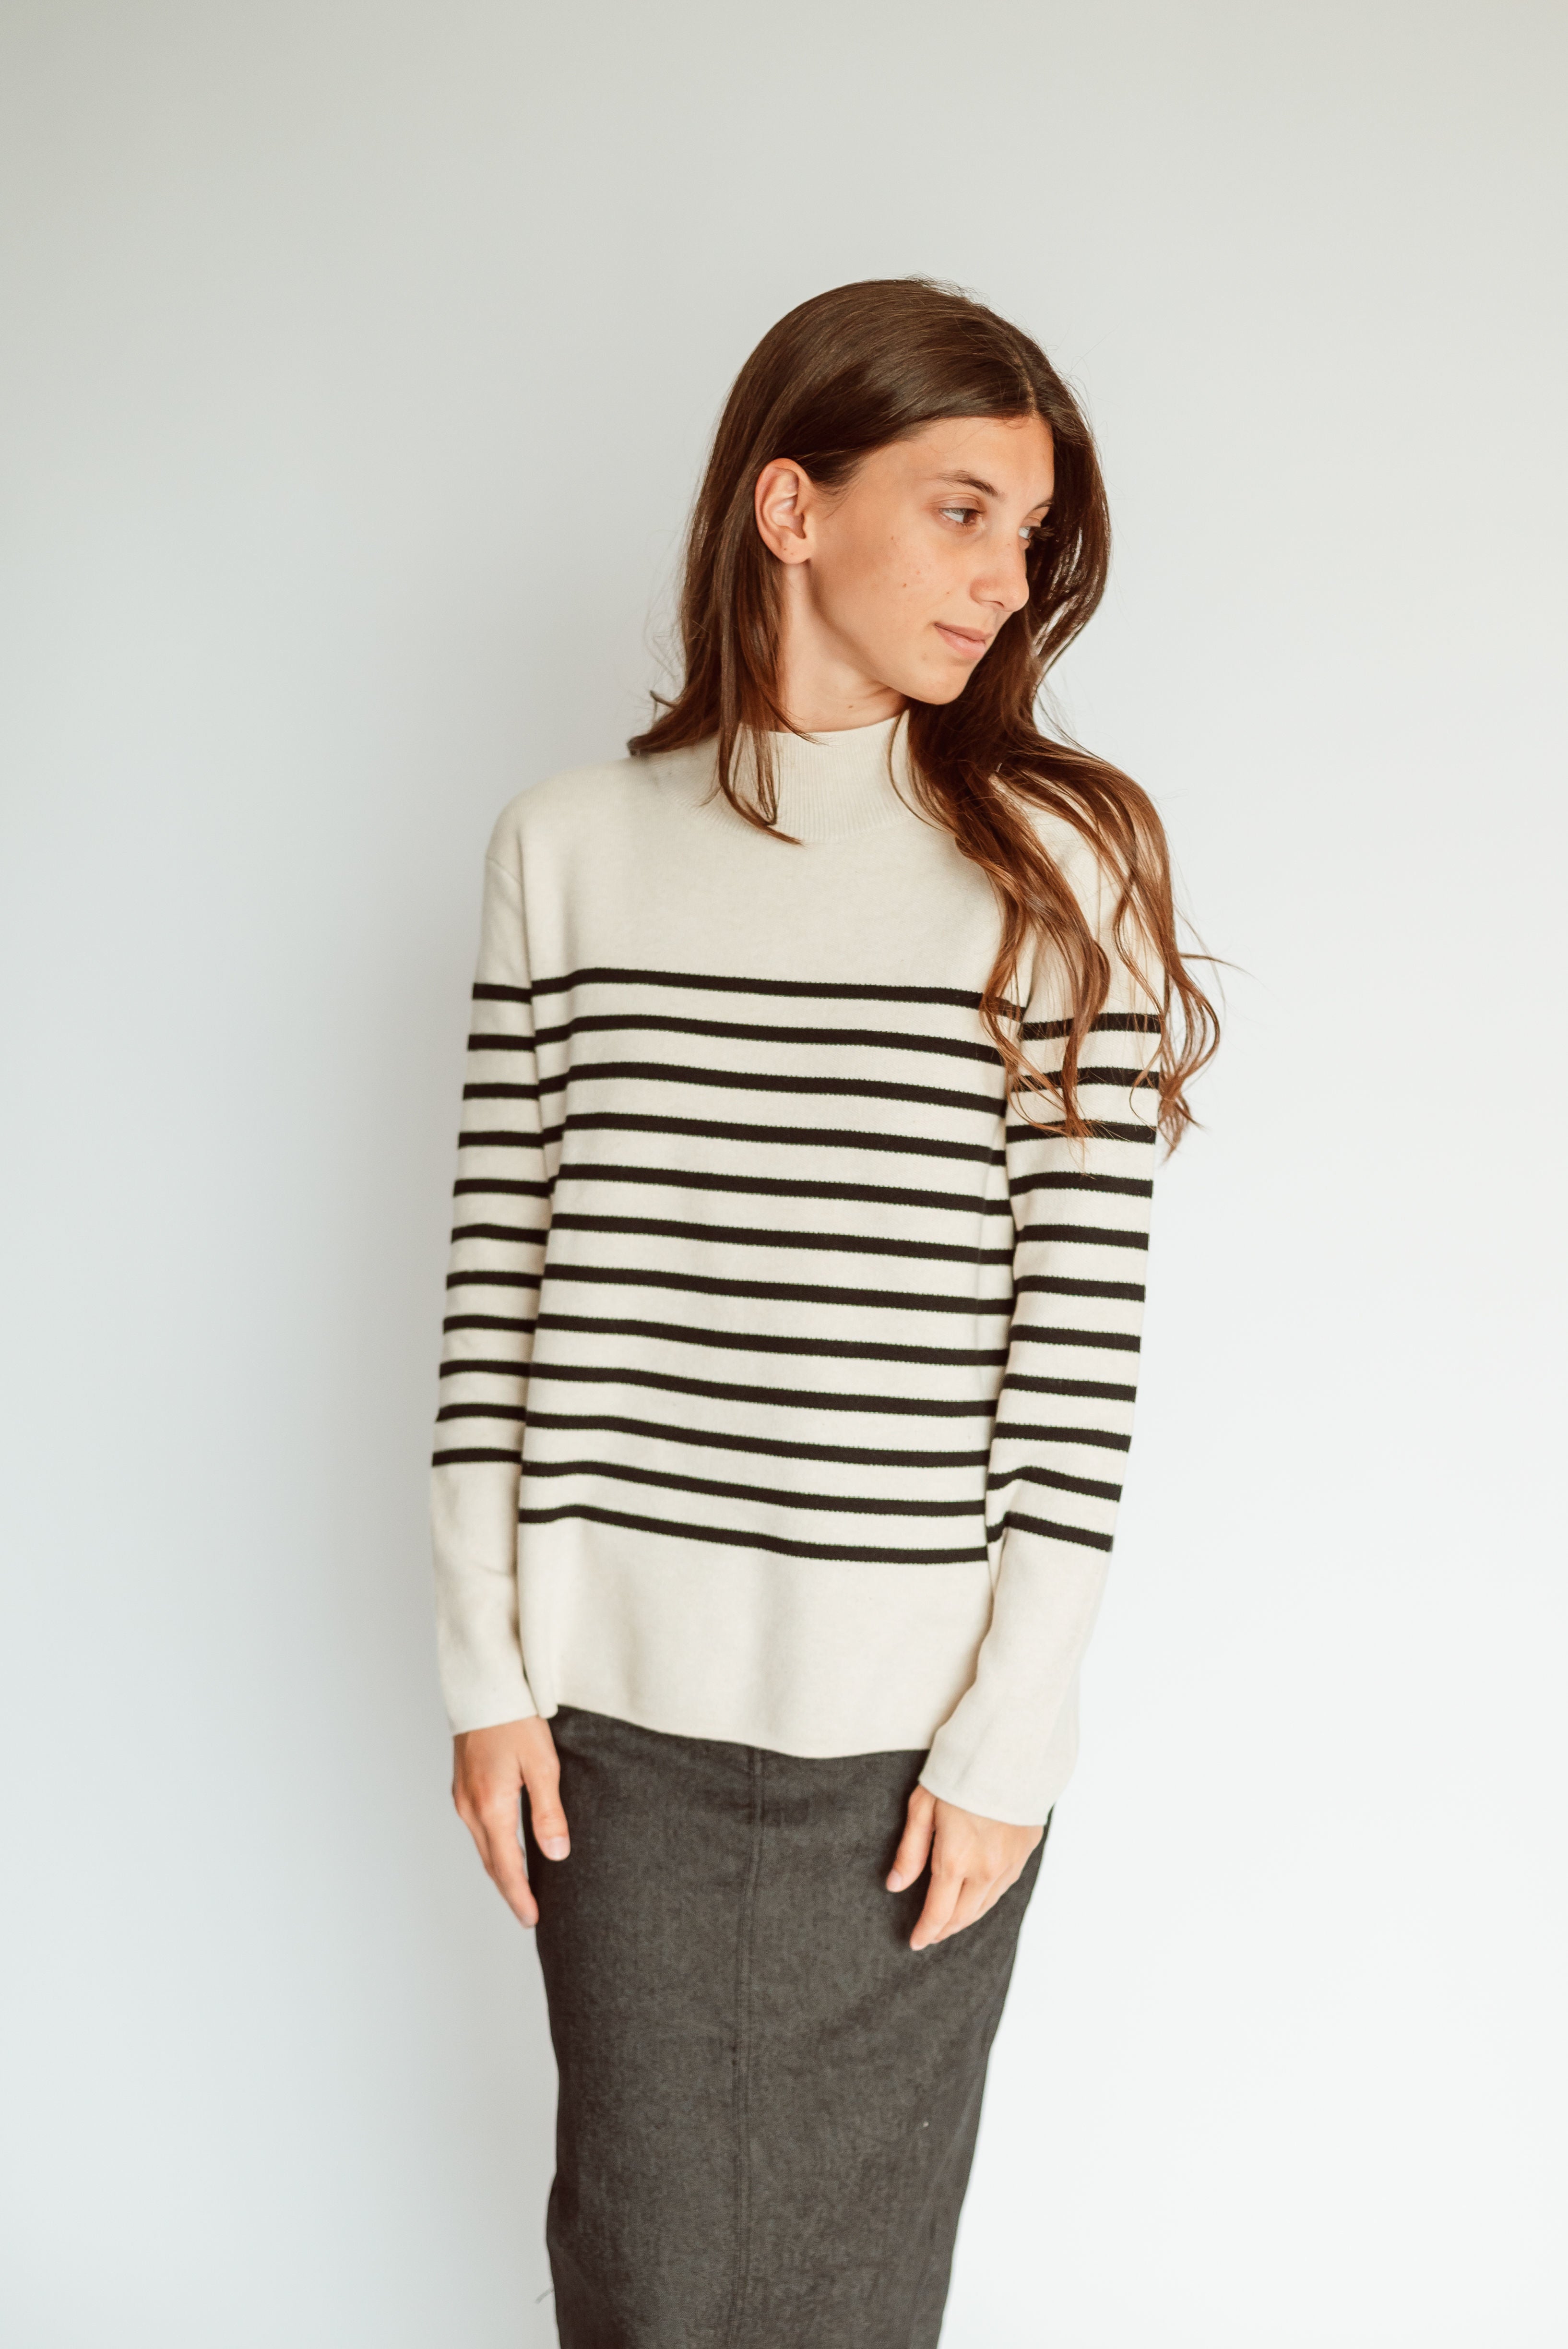 Jasmine Sweater in Oat/Black Stripes